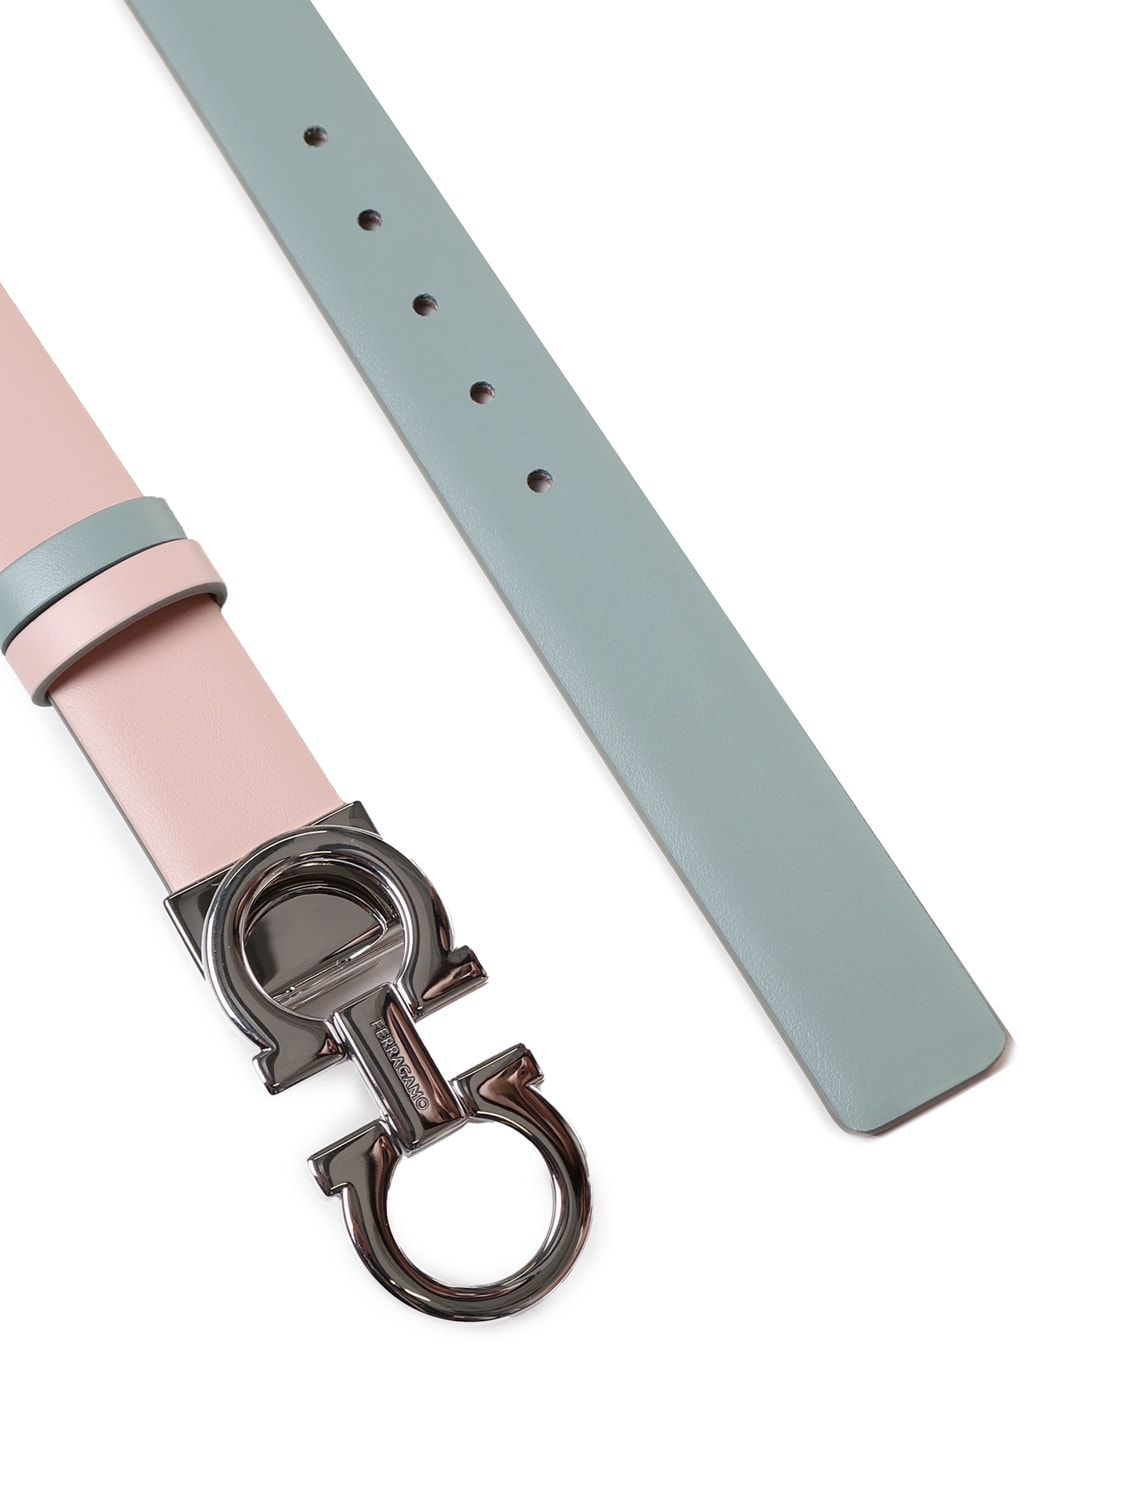 Shop Ferragamo Reversible Leather Belt In Pink, Sugar Paper